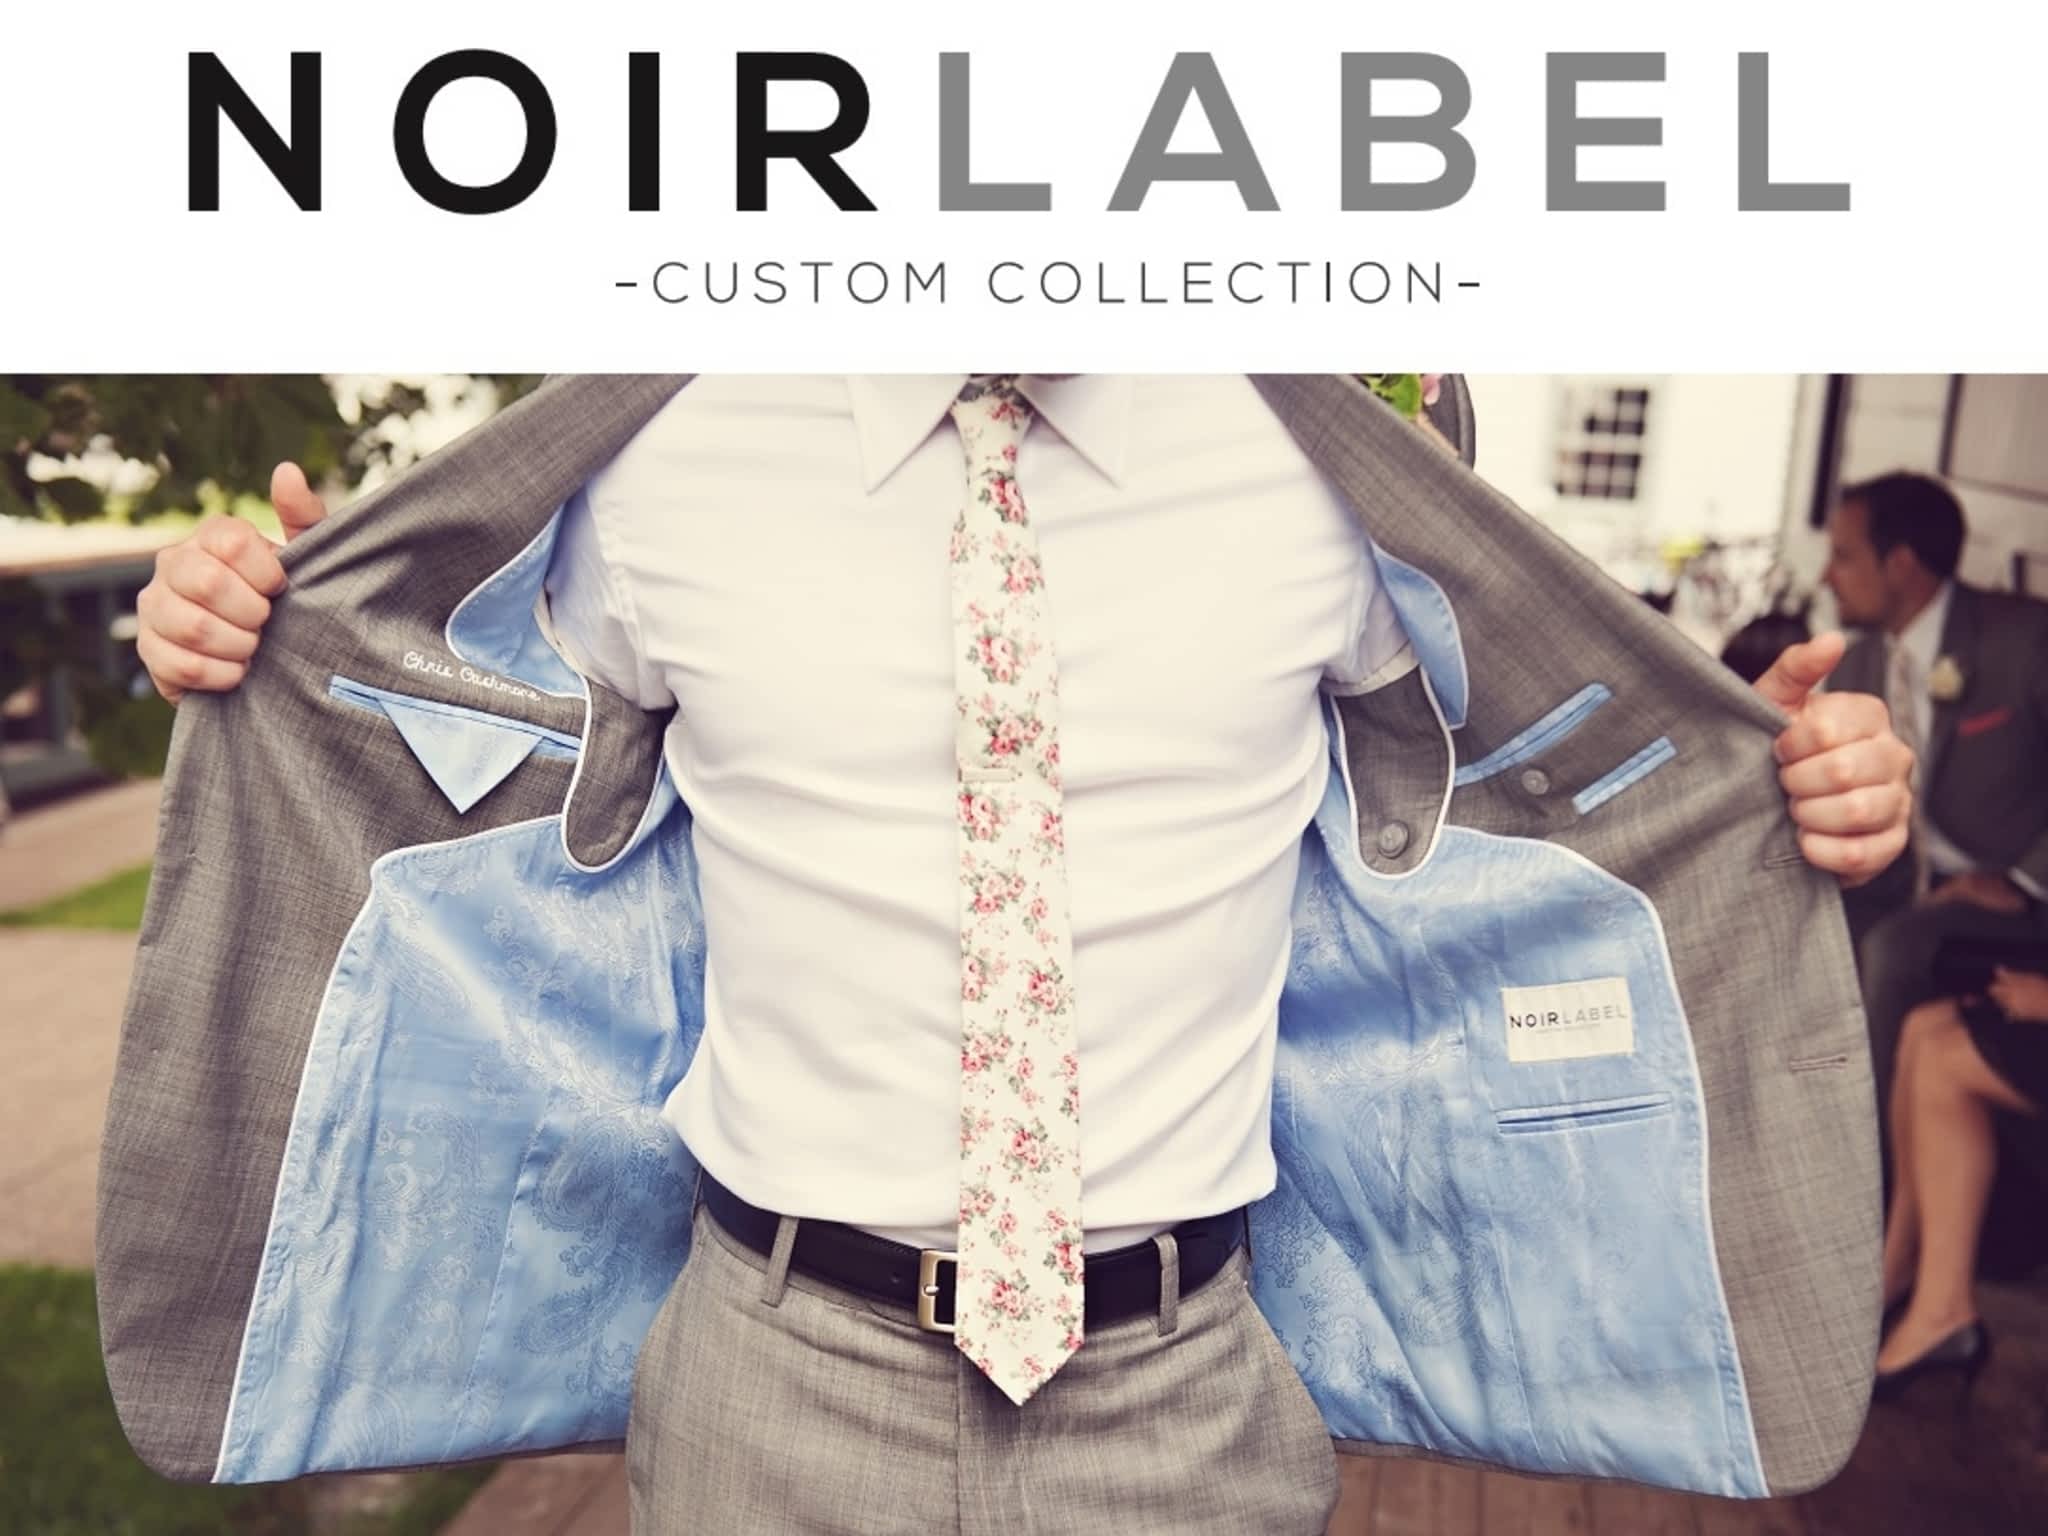 photo Noir Label Custom Collection